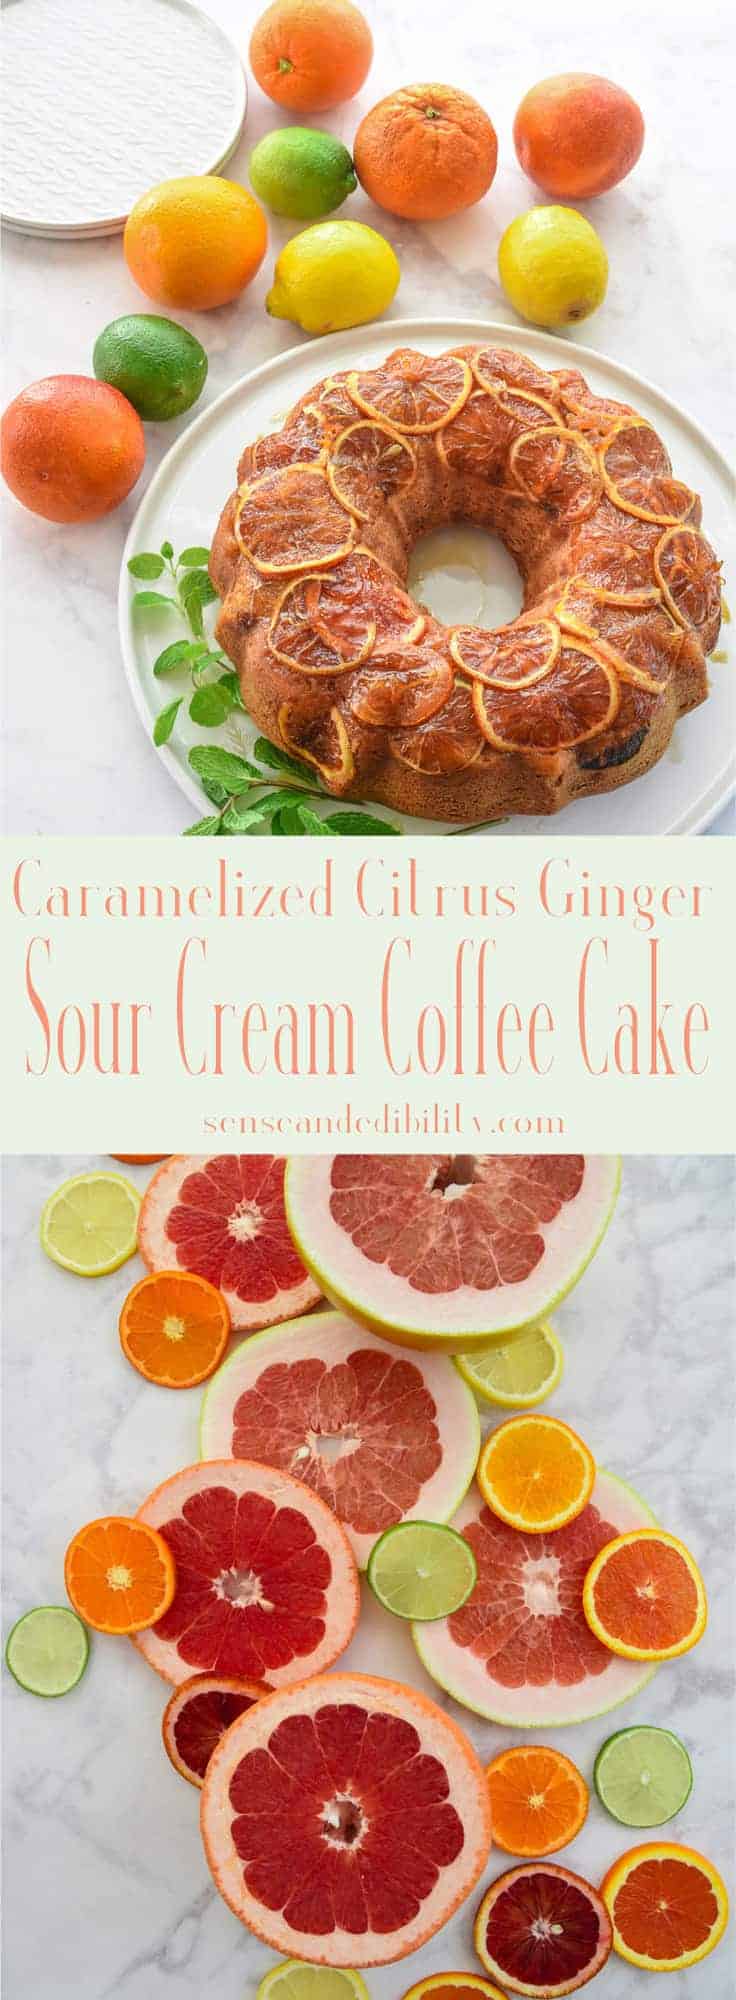 Sense & Edibility's Caramelized Citrus Topped Ginger Sour Cream Coffee Cake Pin